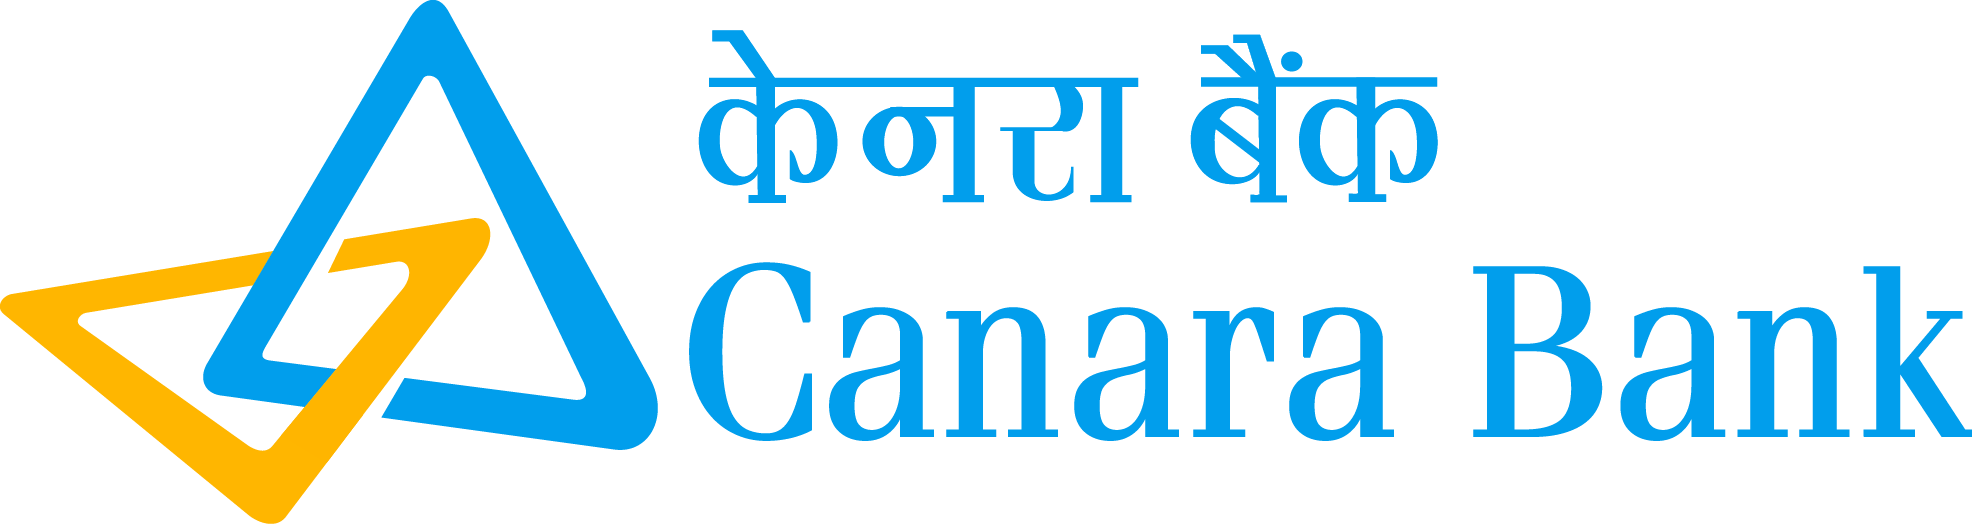 Canara Bank Corporate Training Client